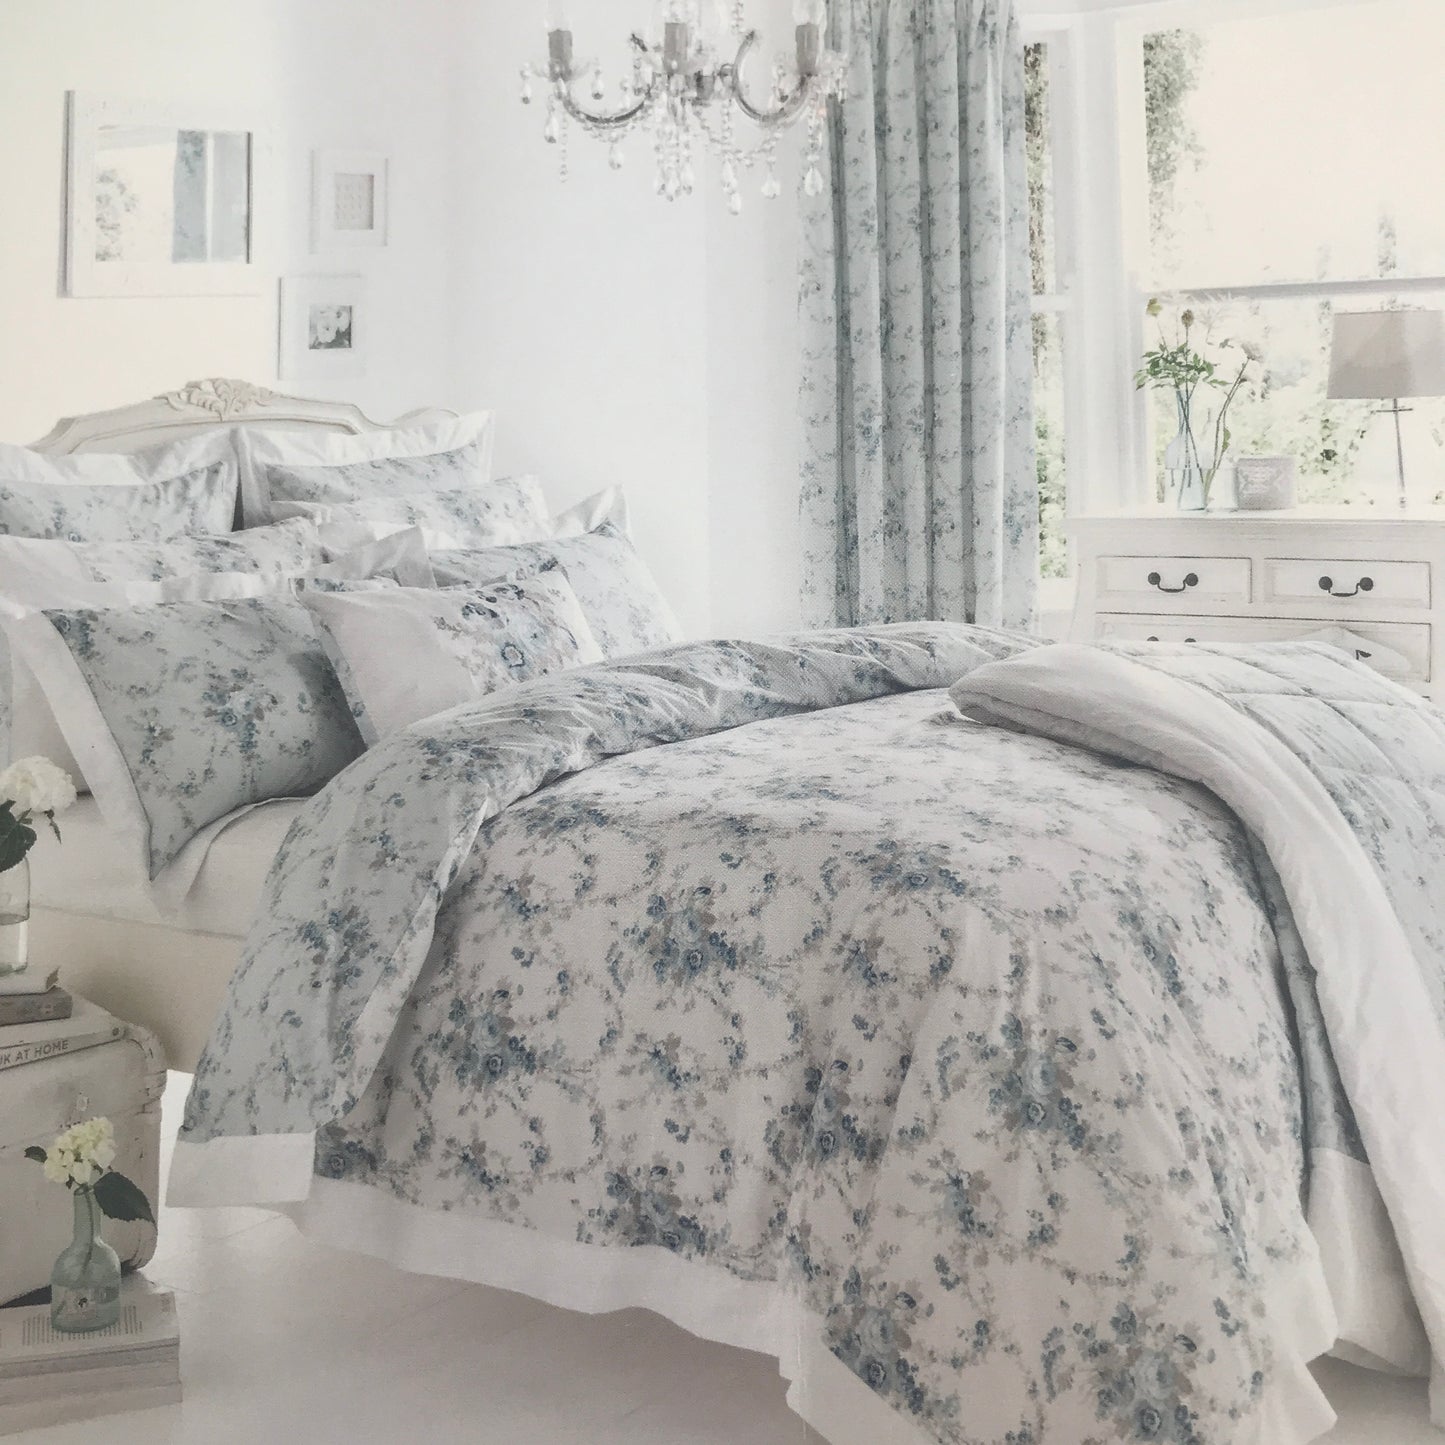 Garland Bouquet Bedspread by Dorma